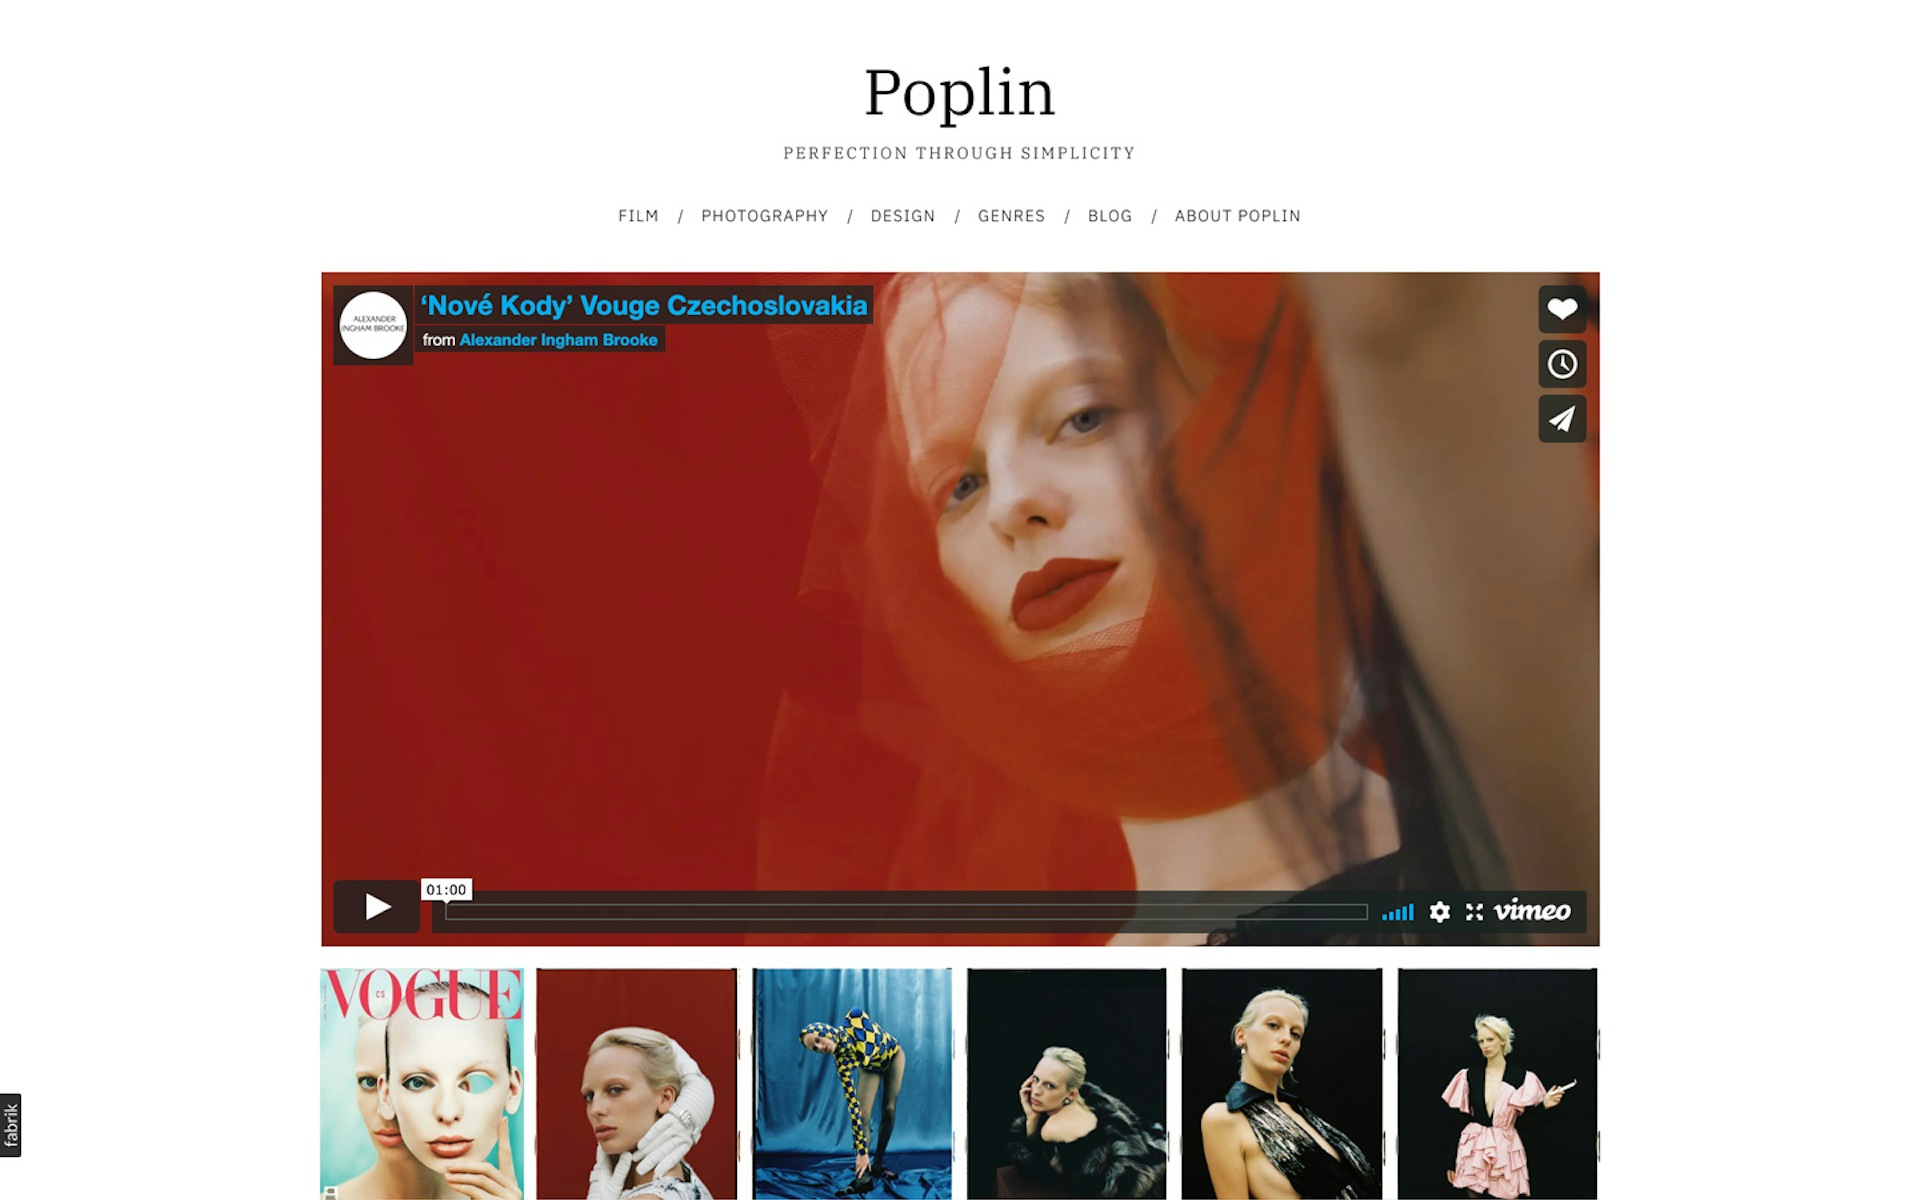 Poplin theme for Fabrik portfolio website